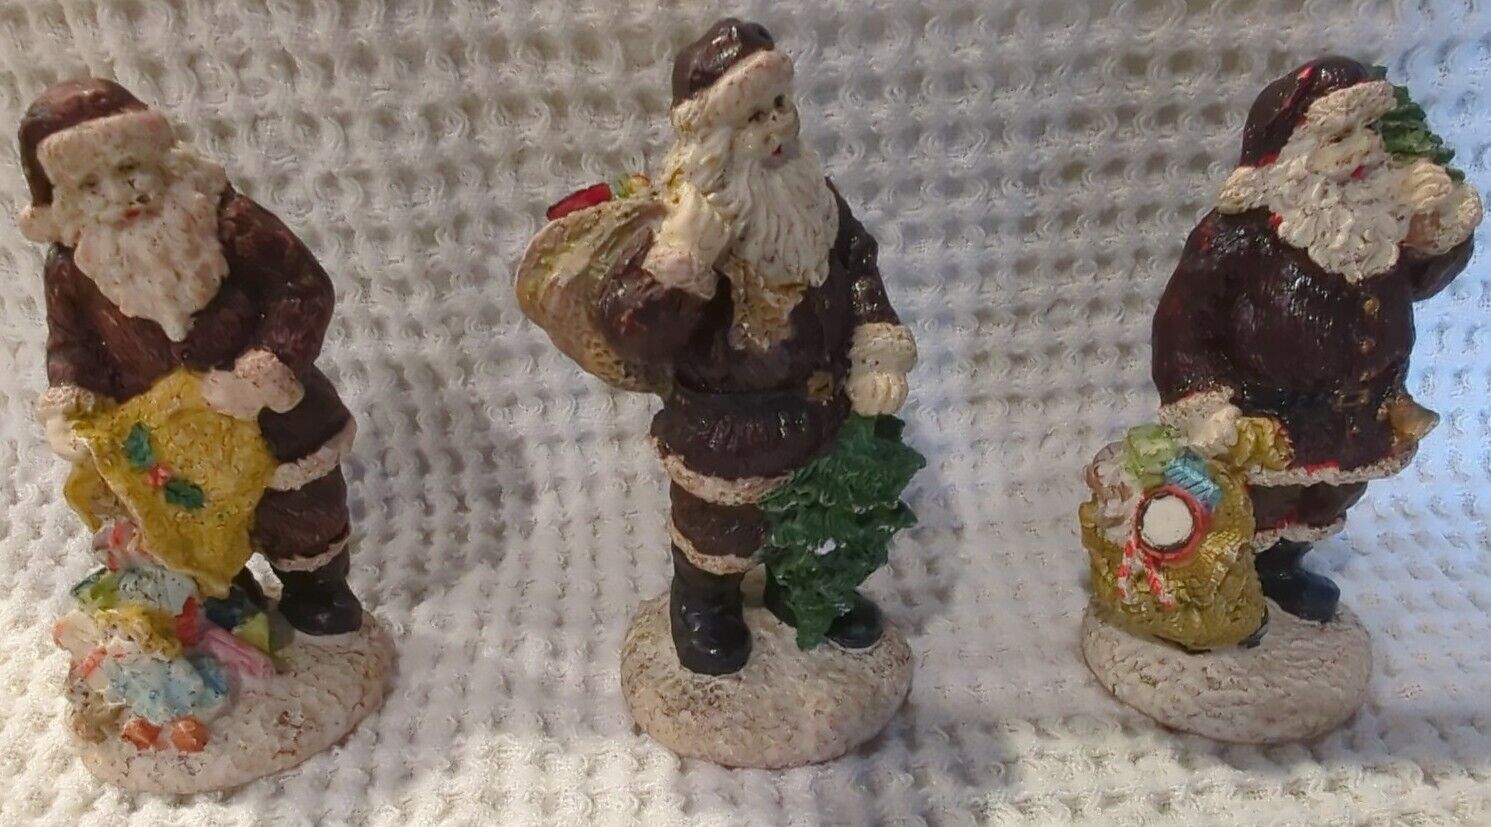 Vintage Resin Santa Claus Figurines - Set of 3 Christmas Decorations (Adorable)